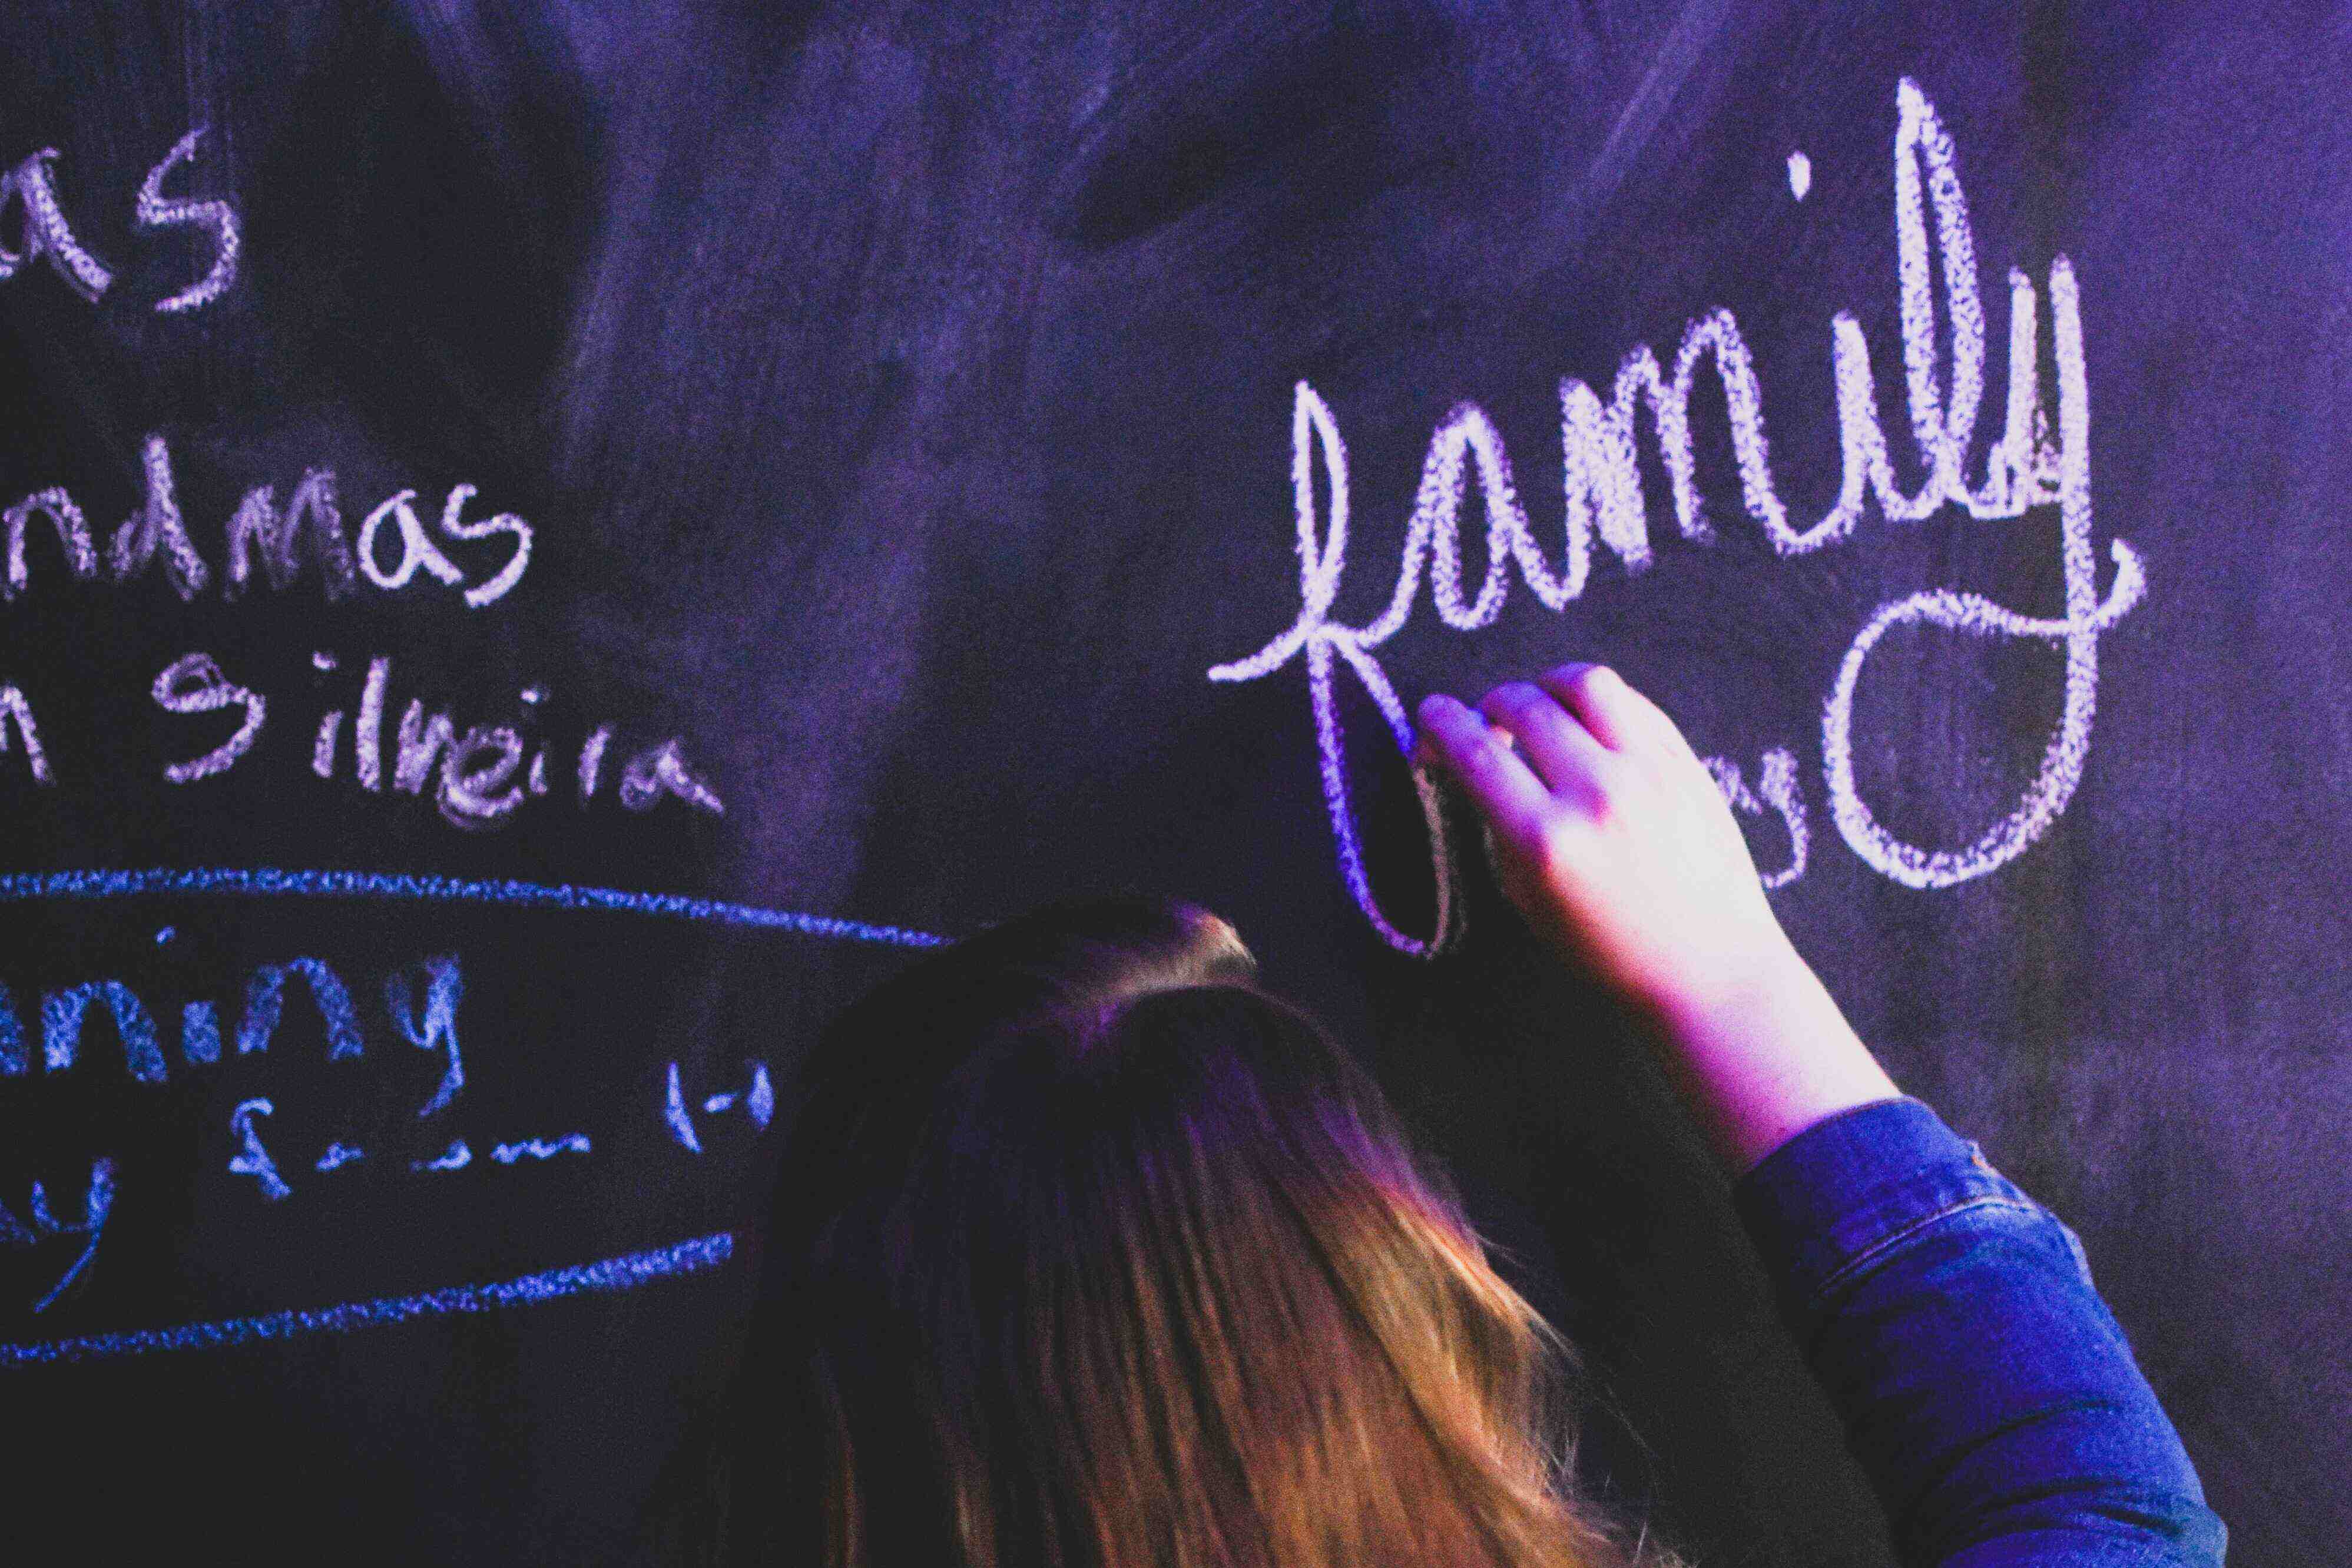 Woman writing on a chalkboard